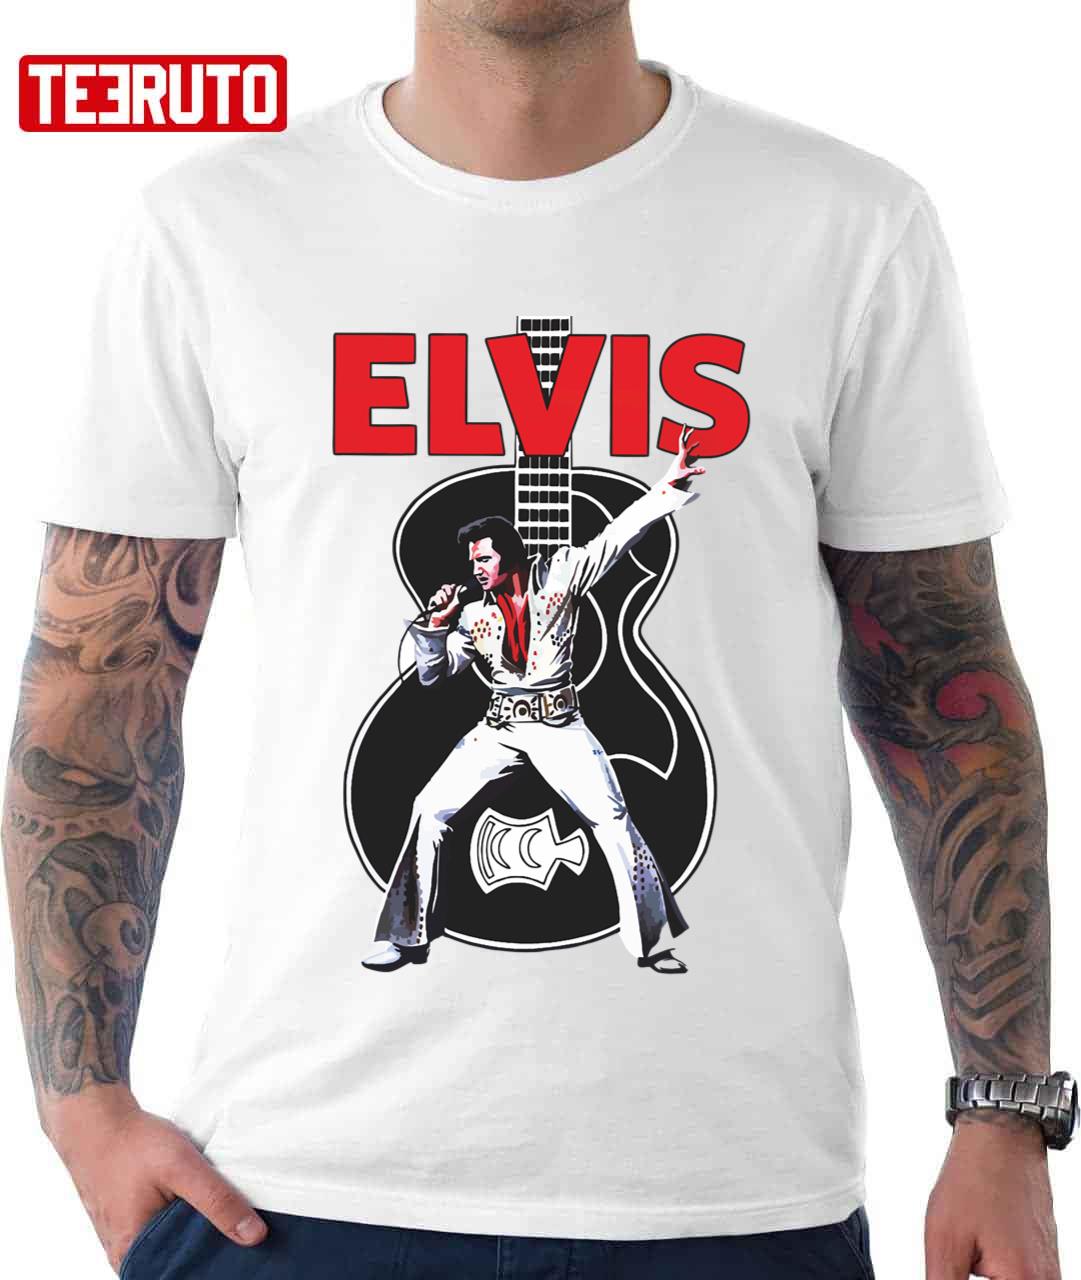 Legend Elvis Presley Artwork Unisex Sweatshirt